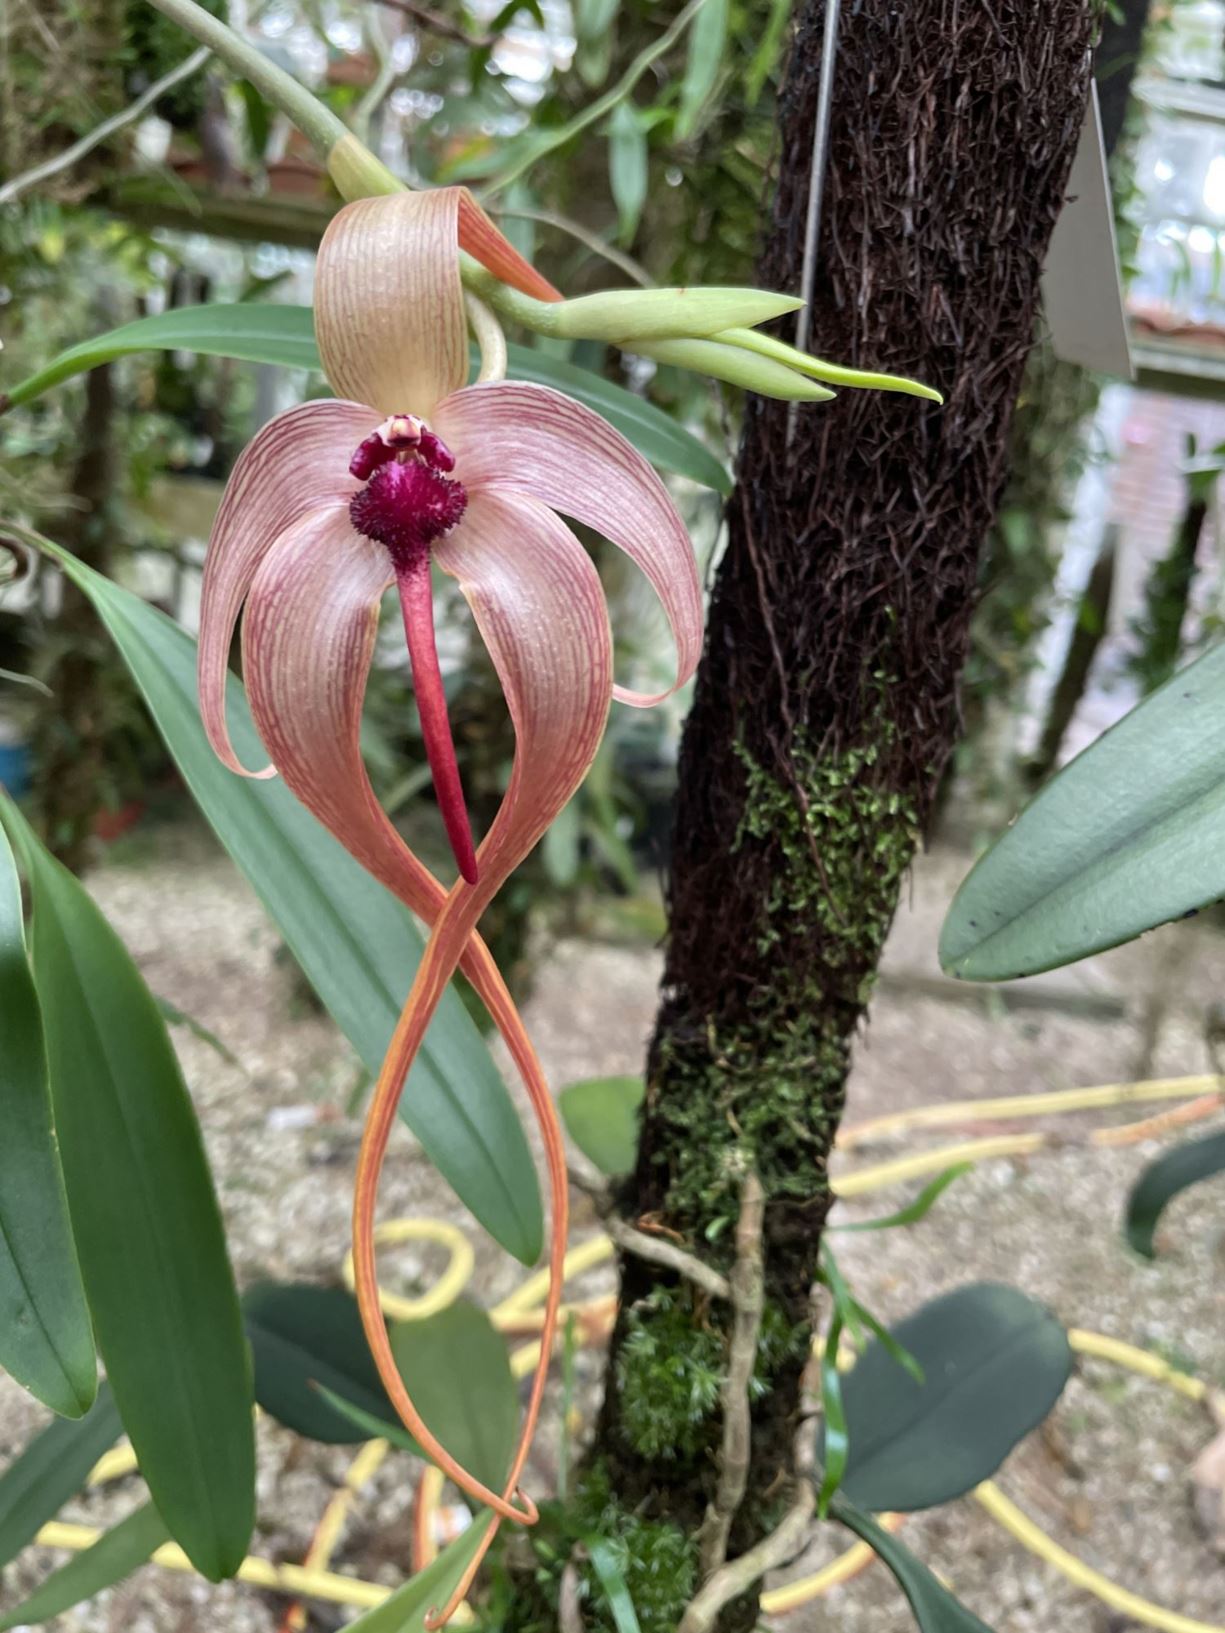 Bulbophyllum echinolabium - Hedgehog-shaped lip bulbophyllum